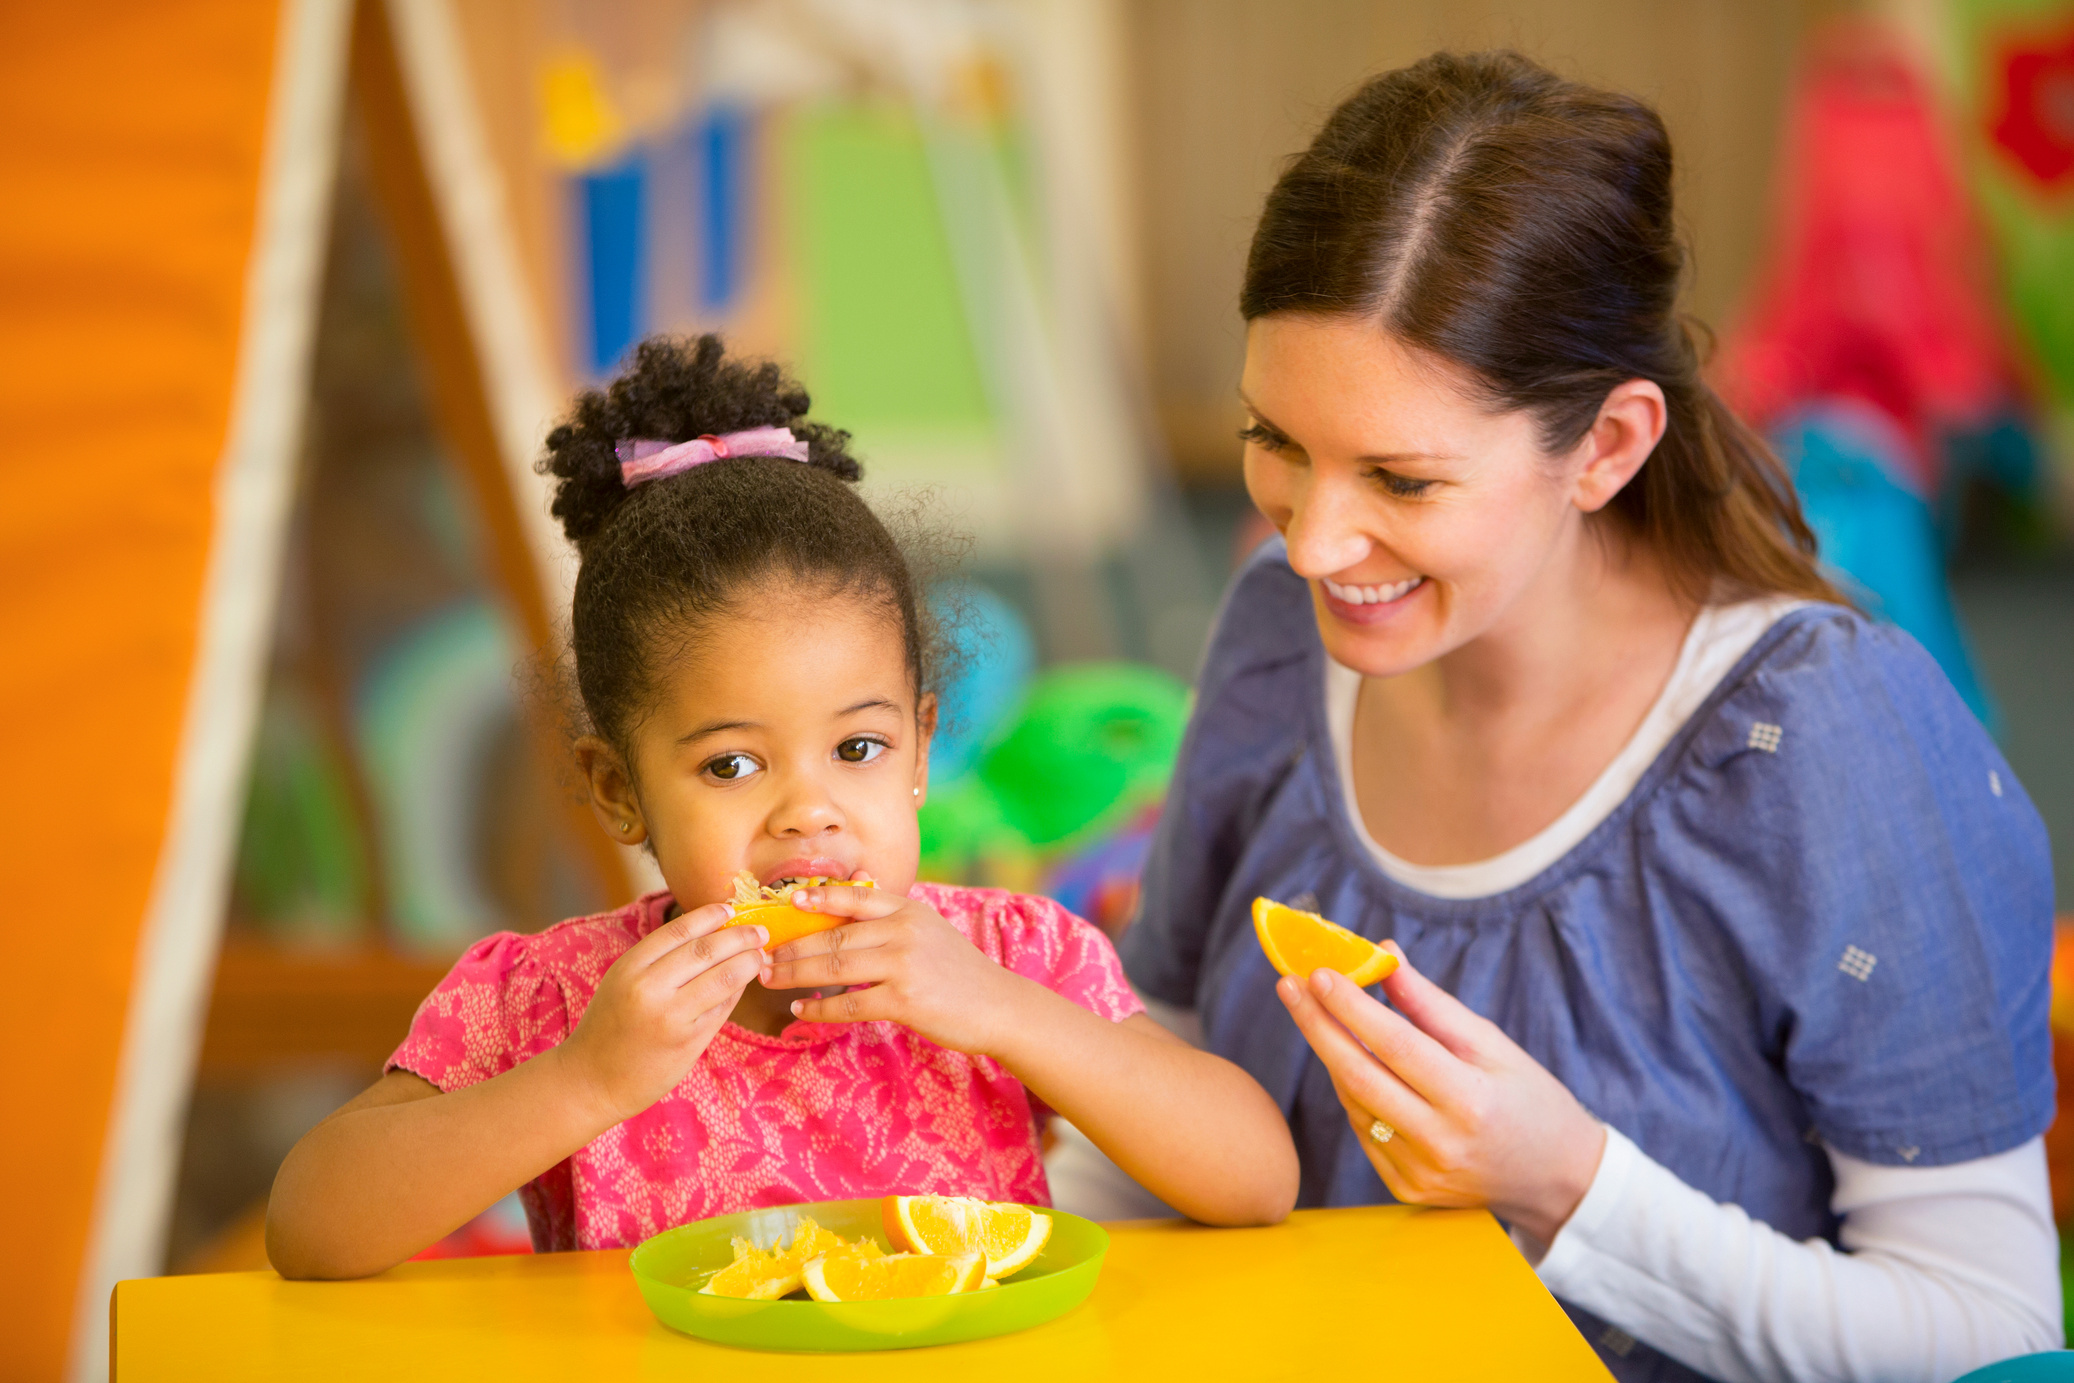 Nursery Teacher and Child Eating Oranges